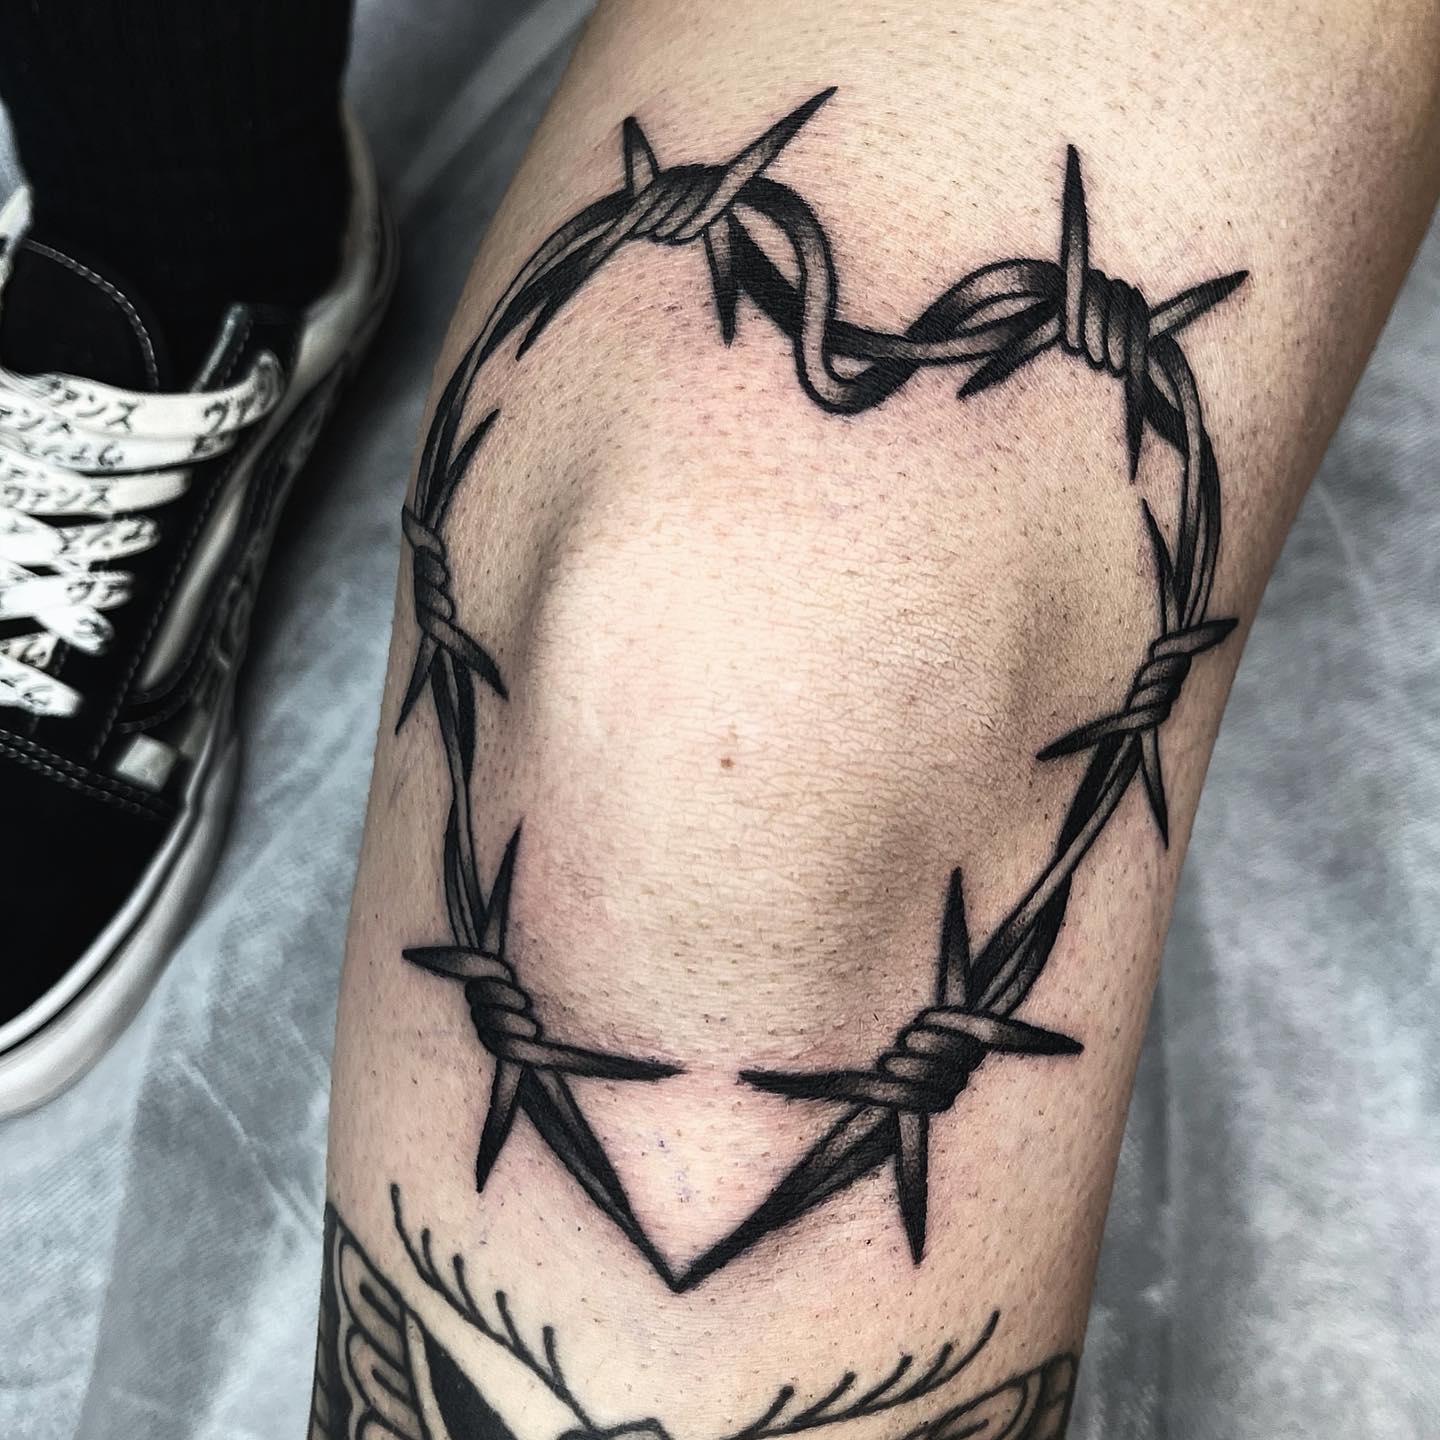 Tatuaje de alambre de púas con forma de corazón